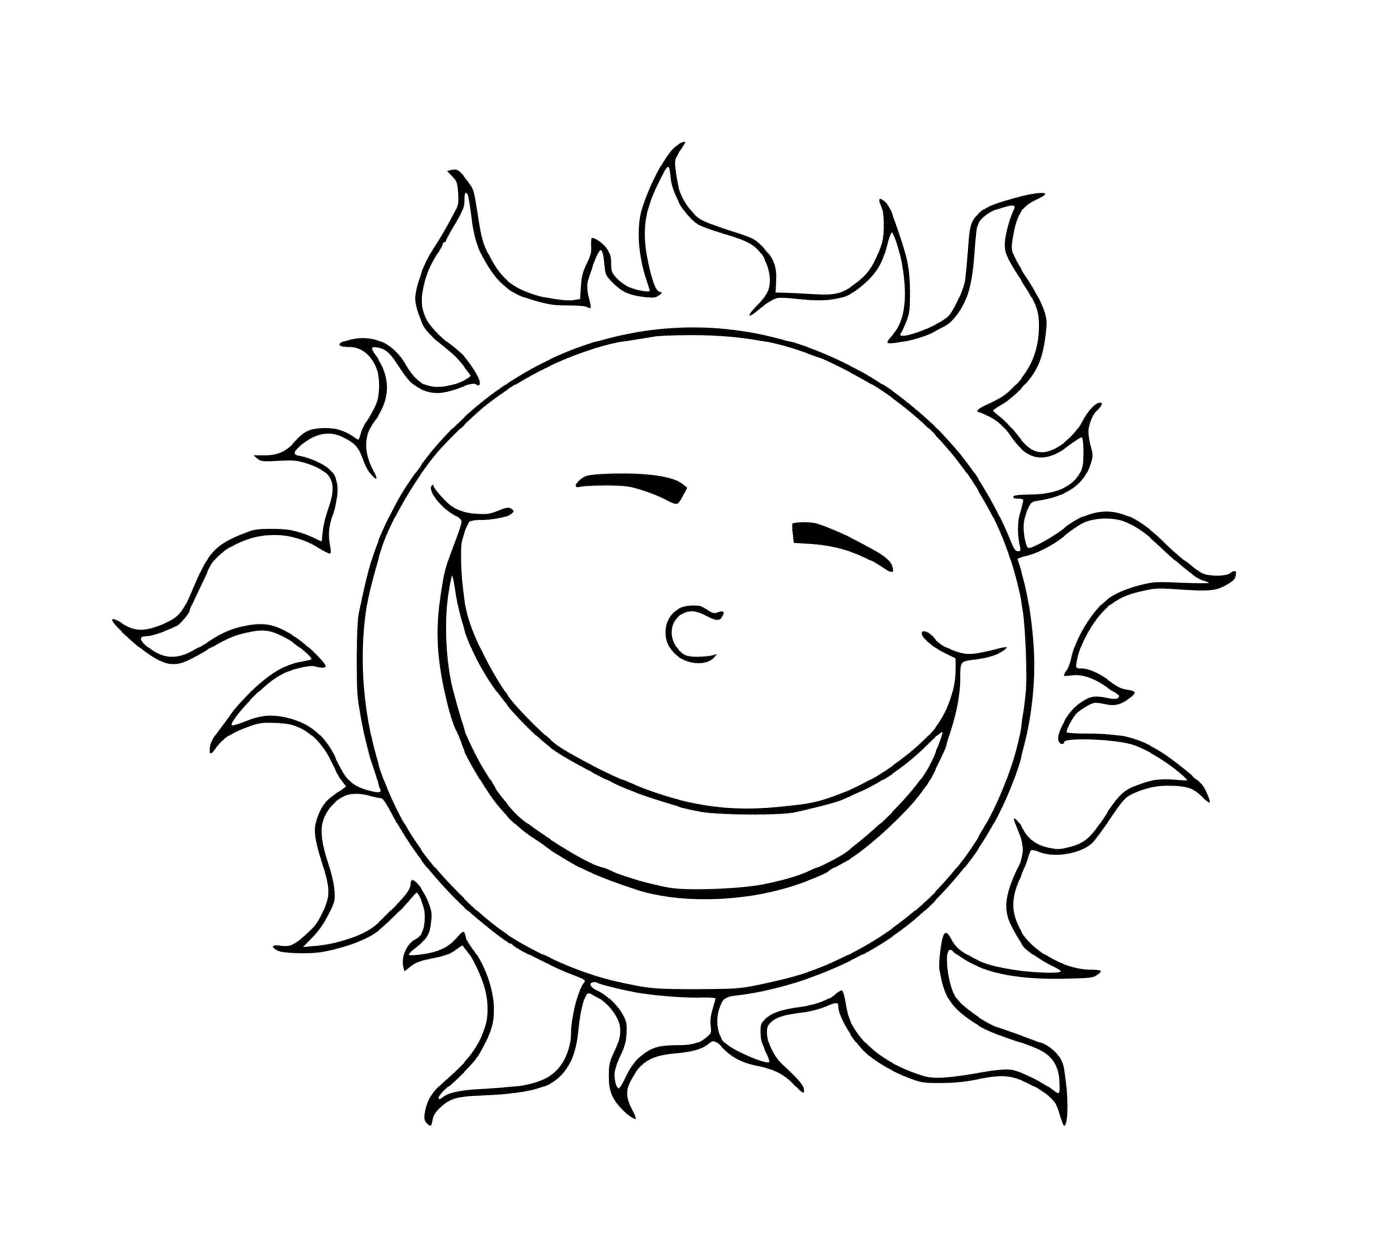   Soleil rayonnant souriant 